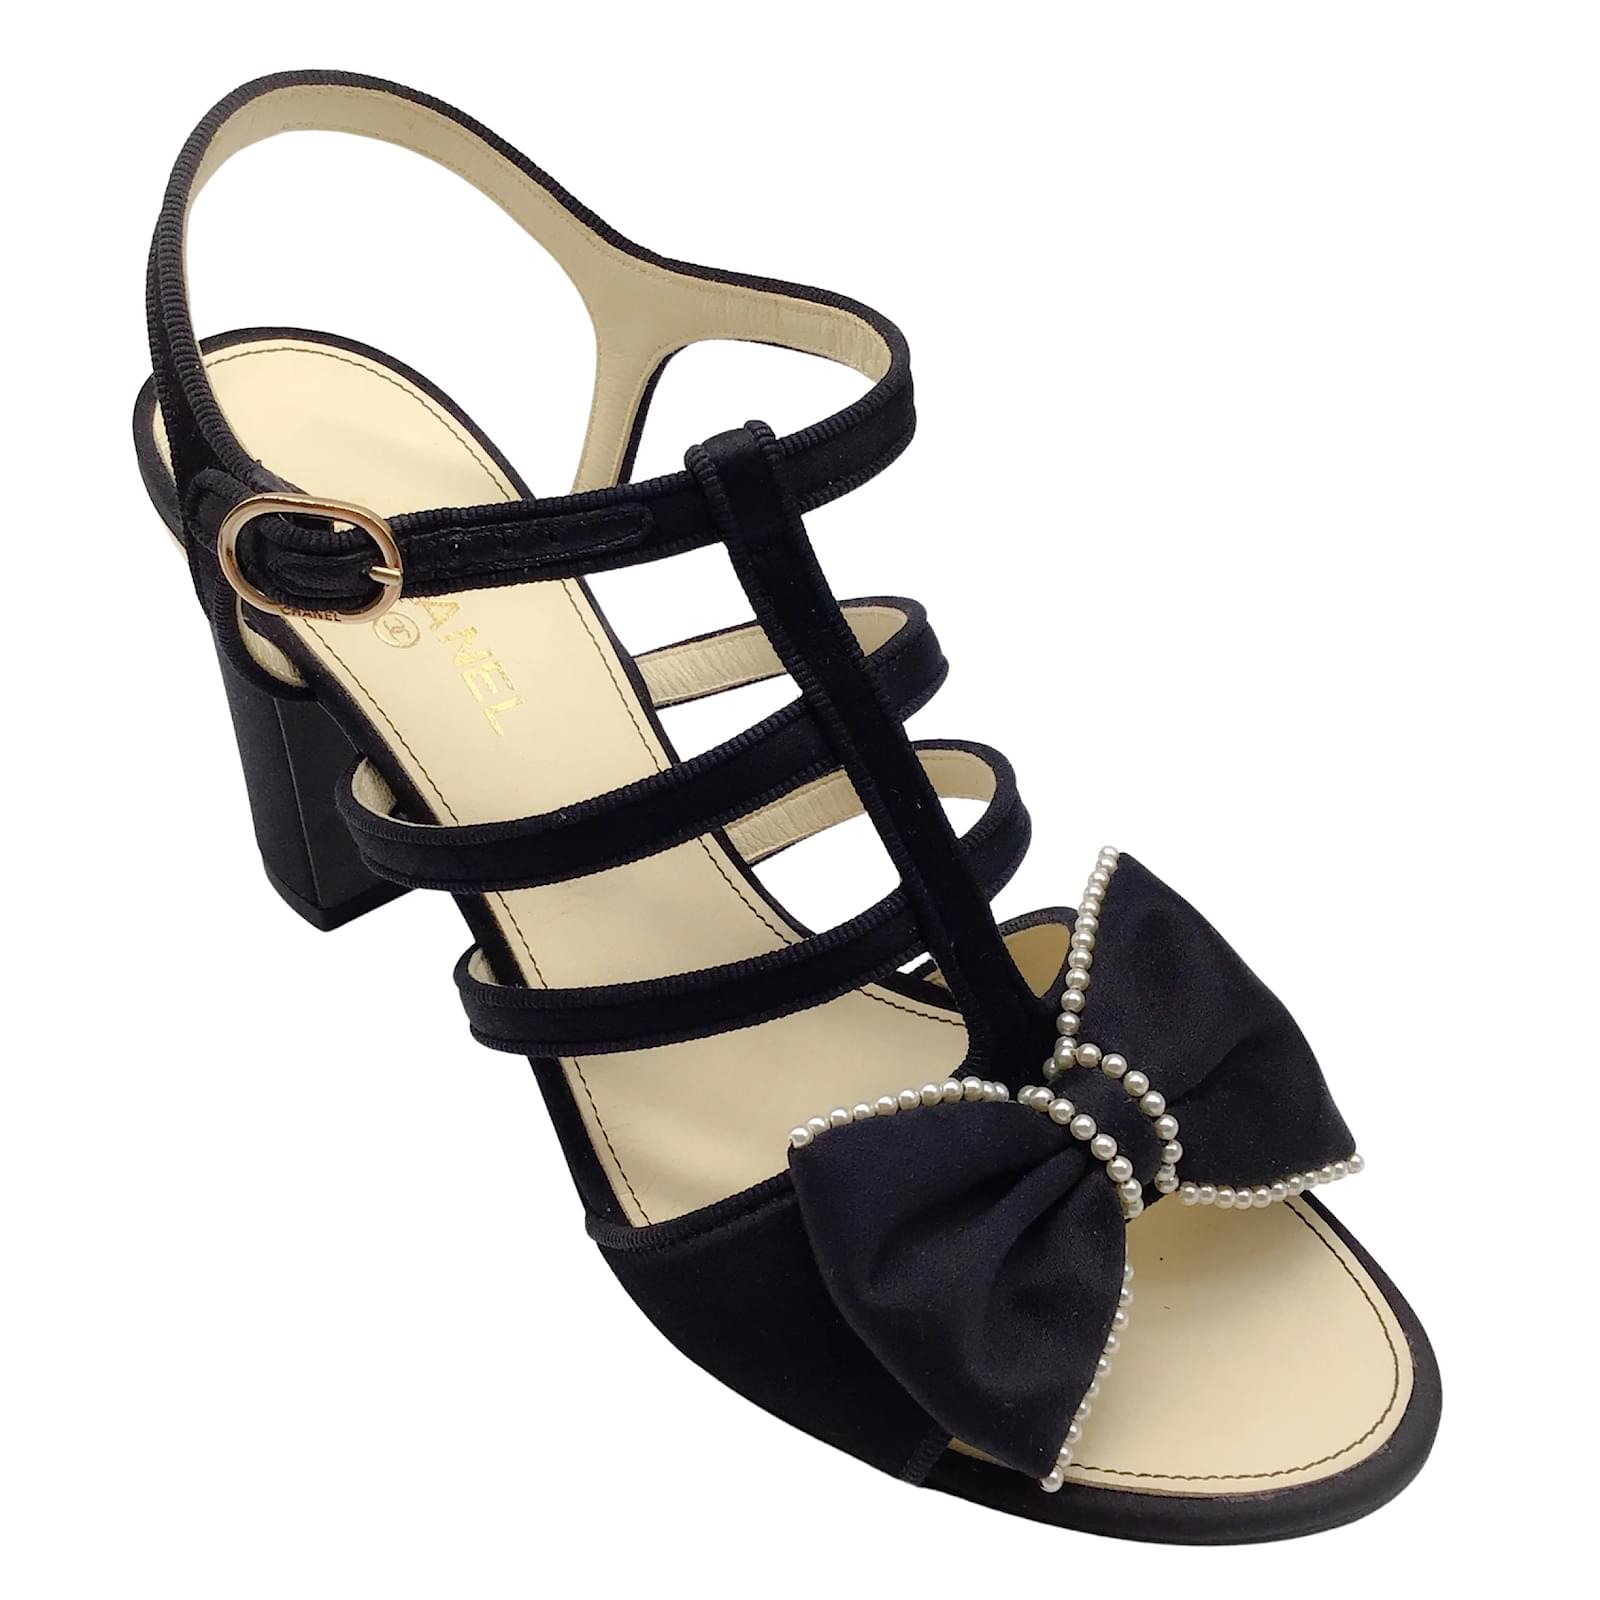 Sandals Chanel Chanel Black Pearl Embellished Bow Detail Satin Sandals